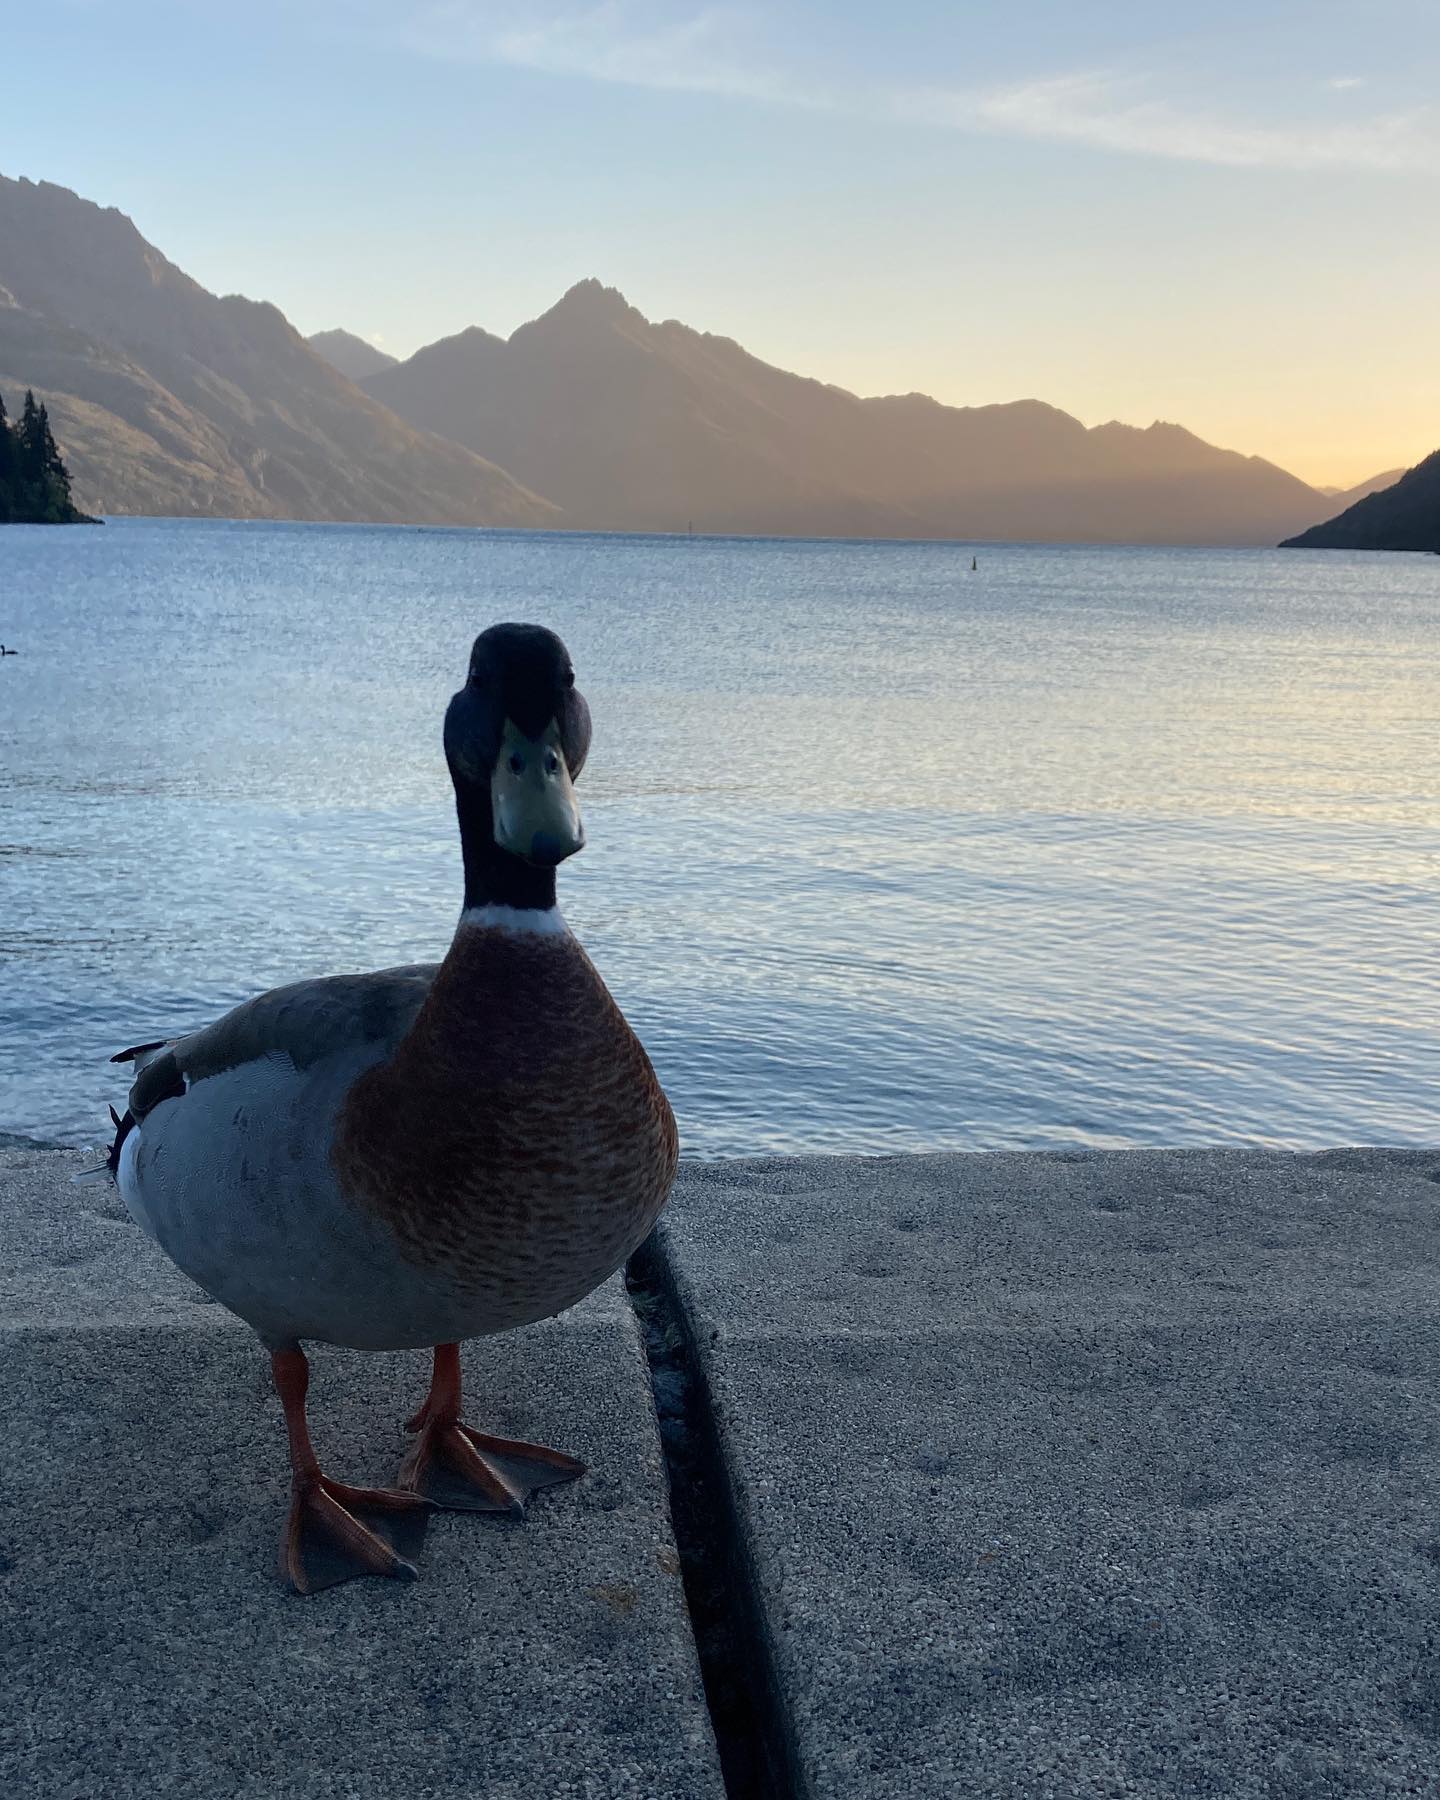 Queenstown, New Zealand 🇳🇿.
.
Show me a more photogenic duck. I’ll wait. 
.
#travel #queenstown #newzealand #duck #travelgram #backpacking #instatravel #nofilter #queenstownnz #newzealandtravel #travelling #backpacker #weekendaway #travellife #purenewzealand #backyourbackyard